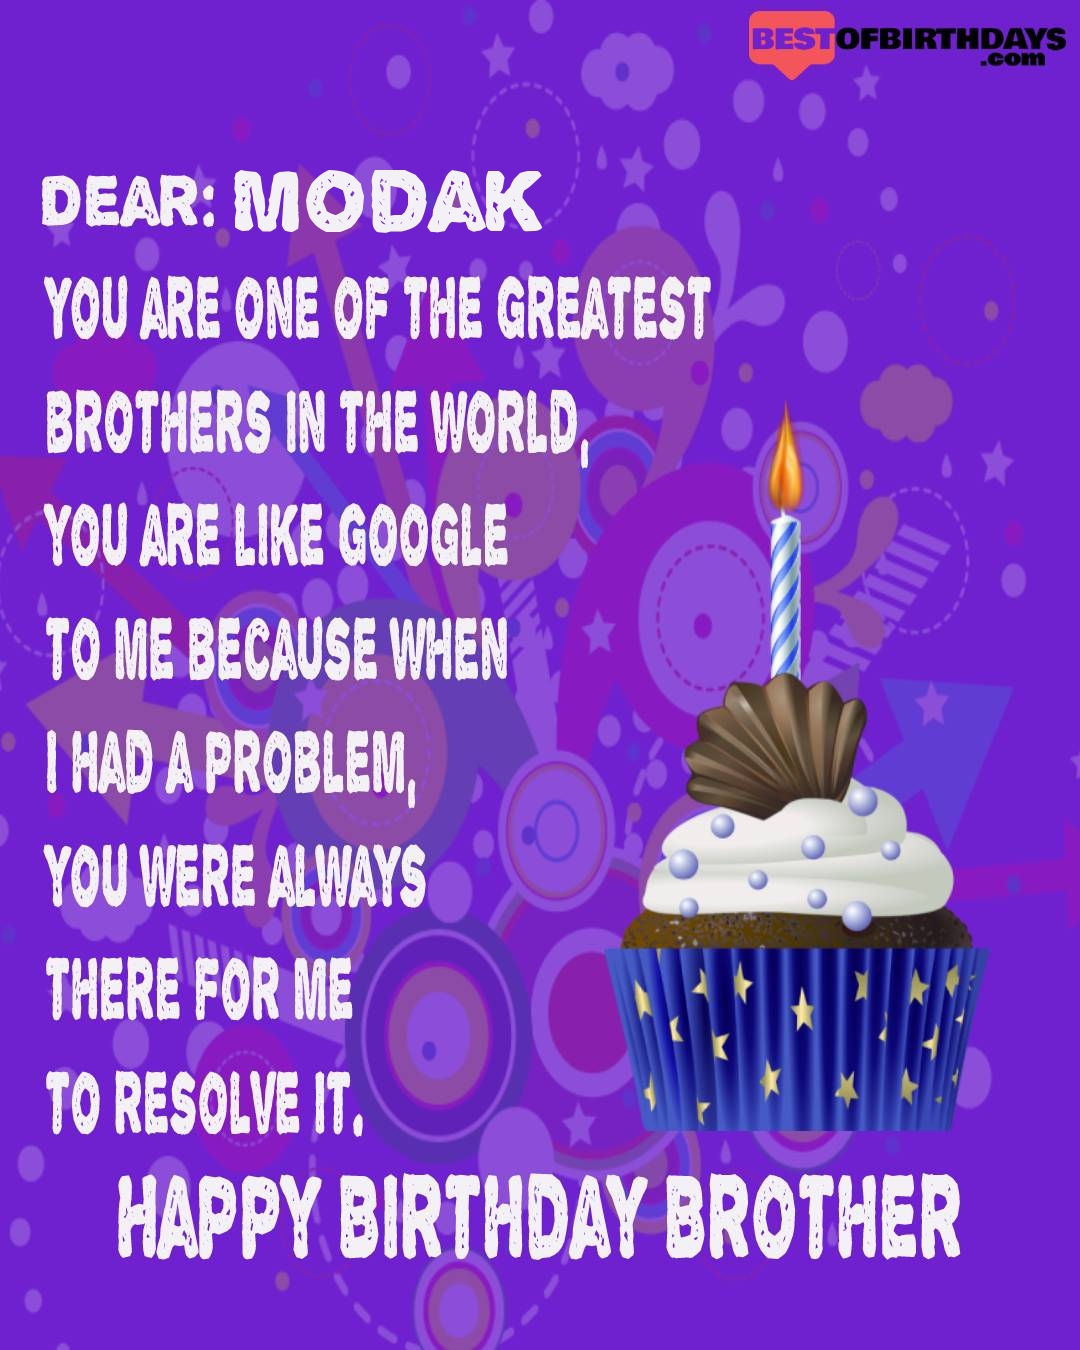 Happy birthday modak bhai brother bro